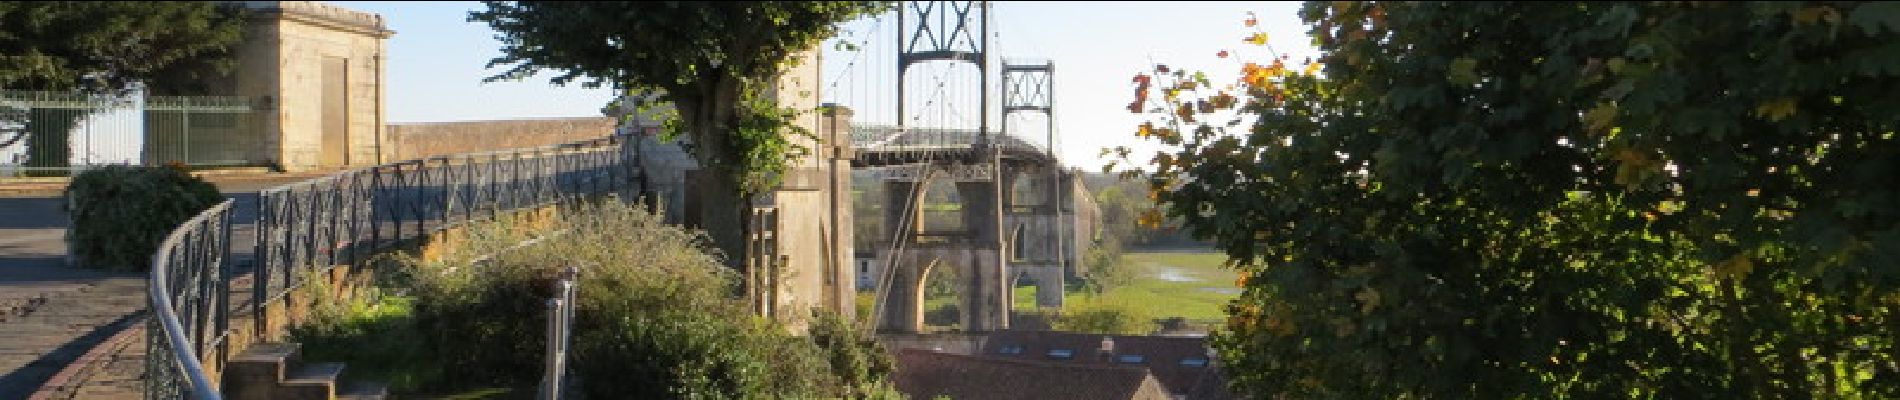 Tocht Fiets Rochefort - Les ponts rochefortais - Rochefort - Photo